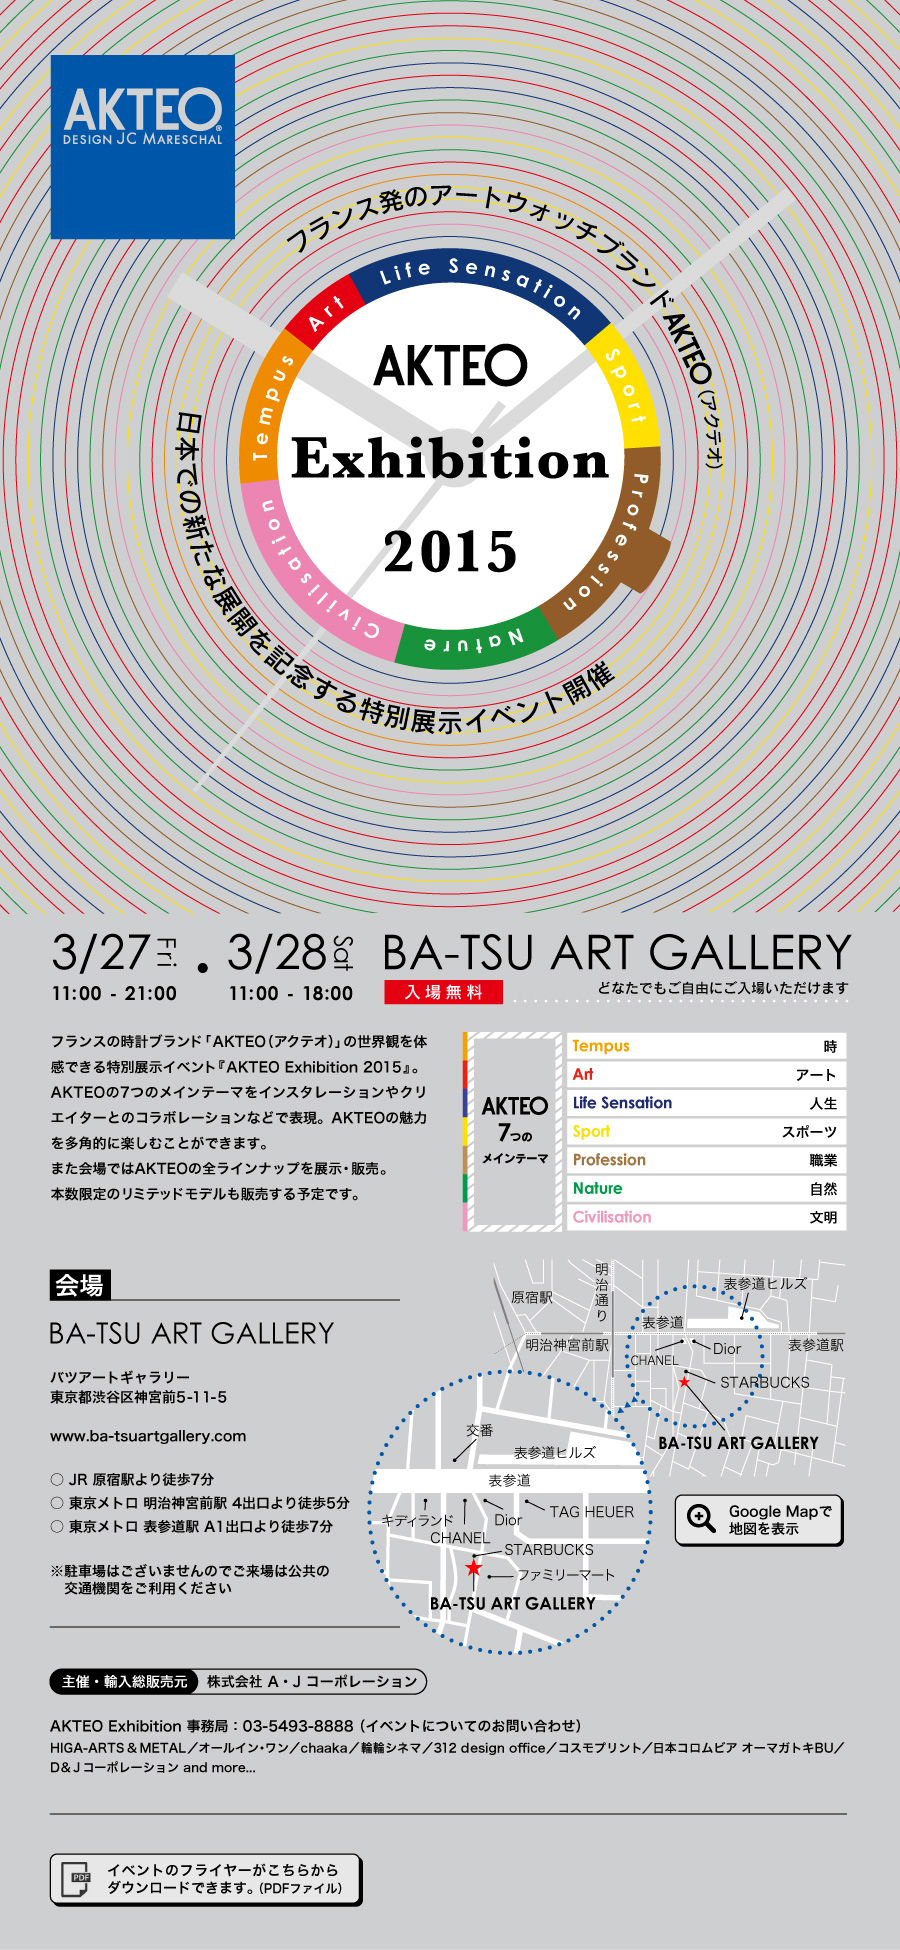 AKTEO Exhibition 2015 について